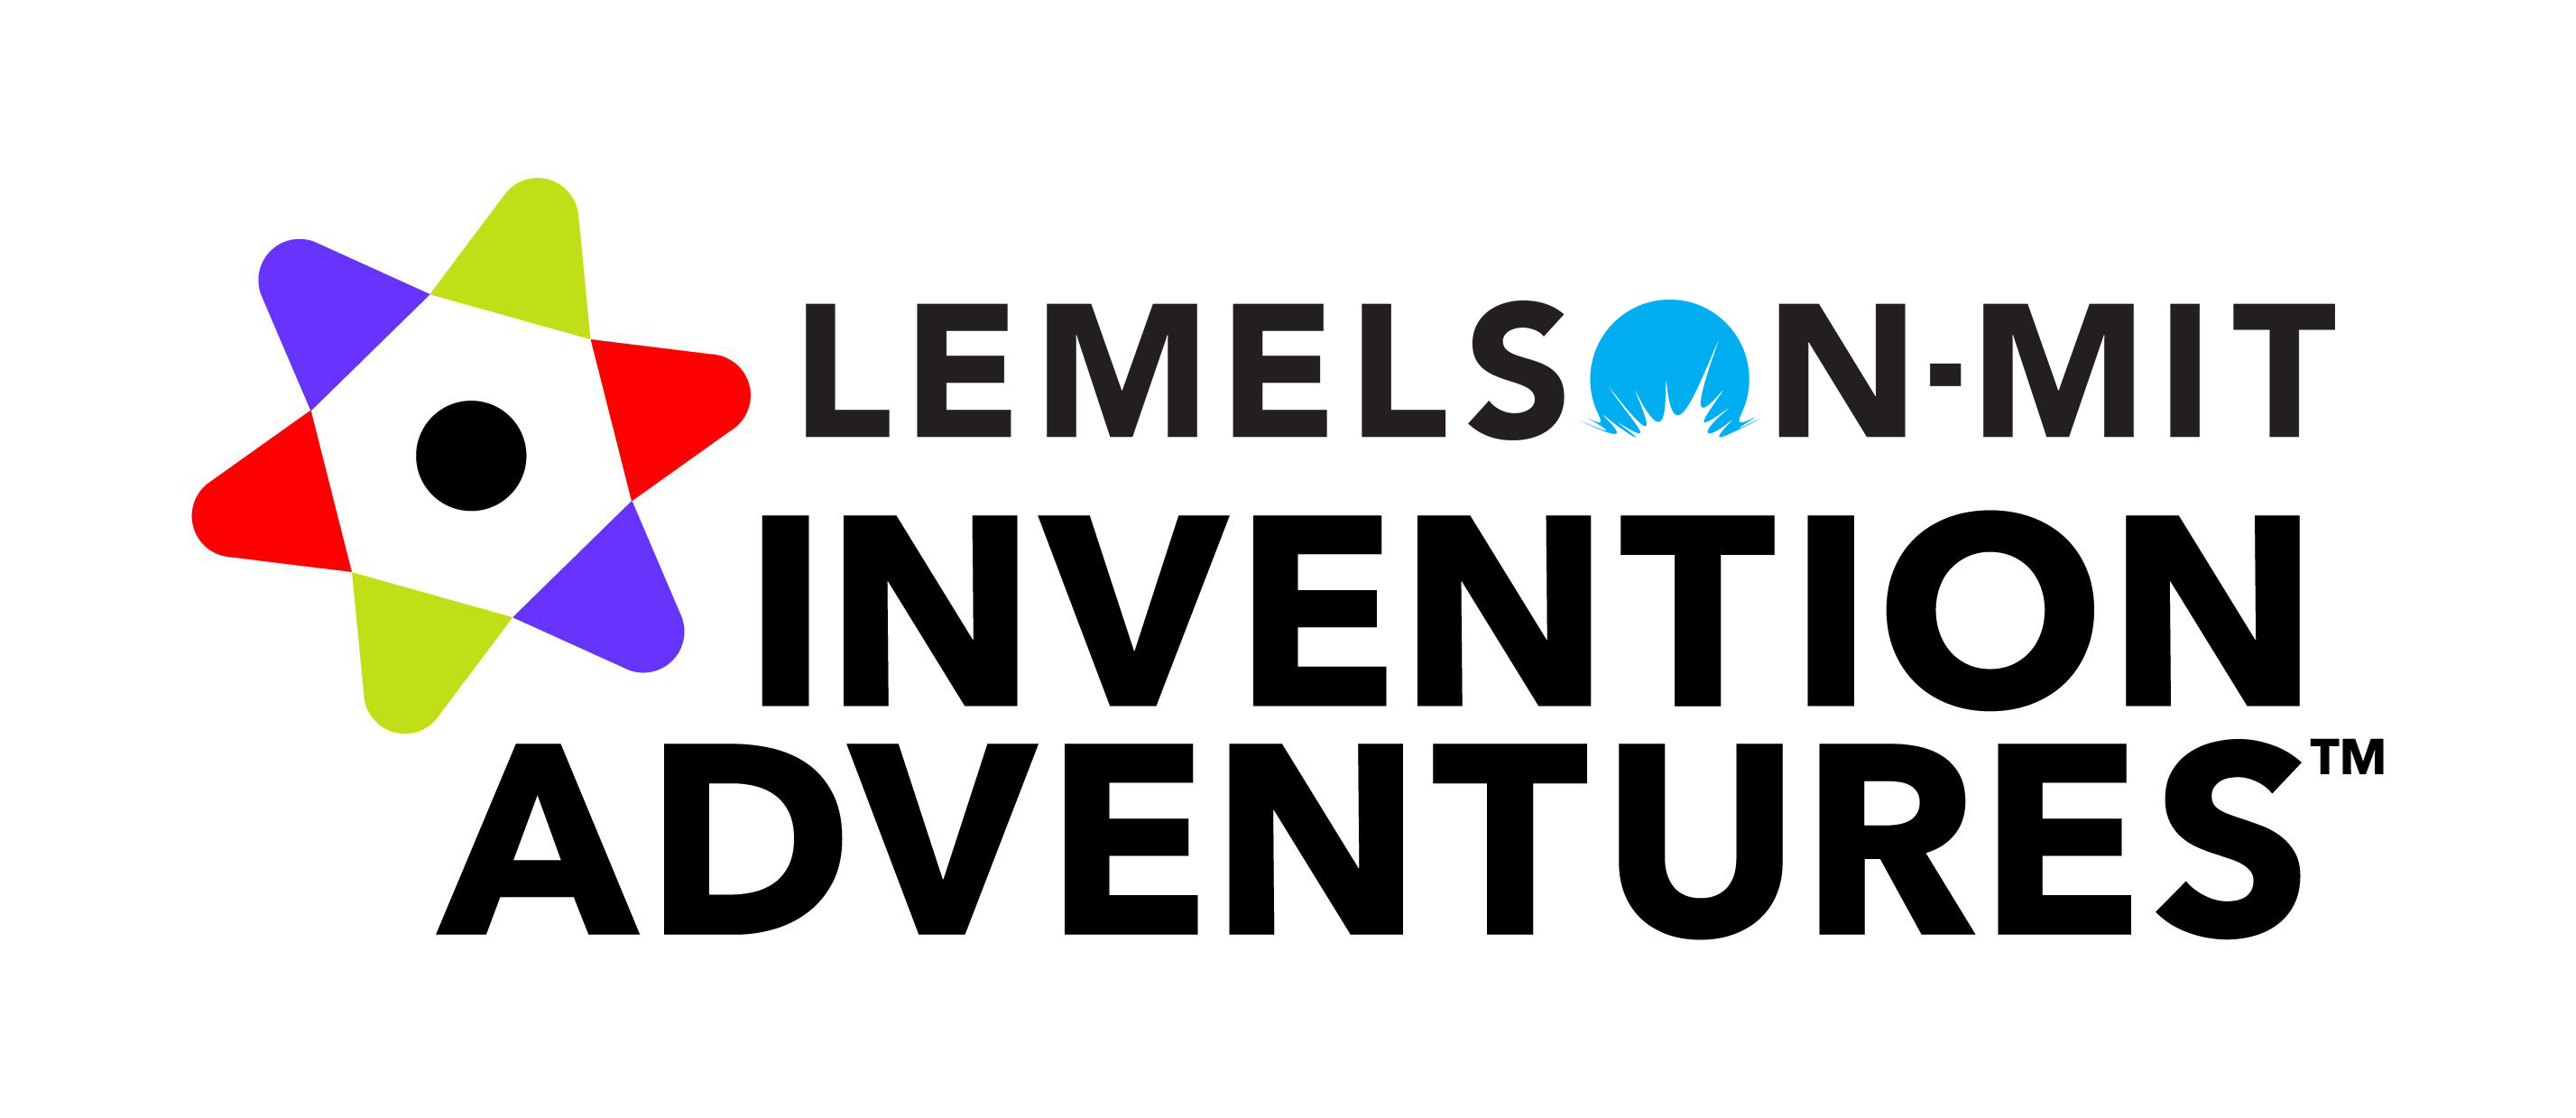 LMIT/Invention Adventures Logo